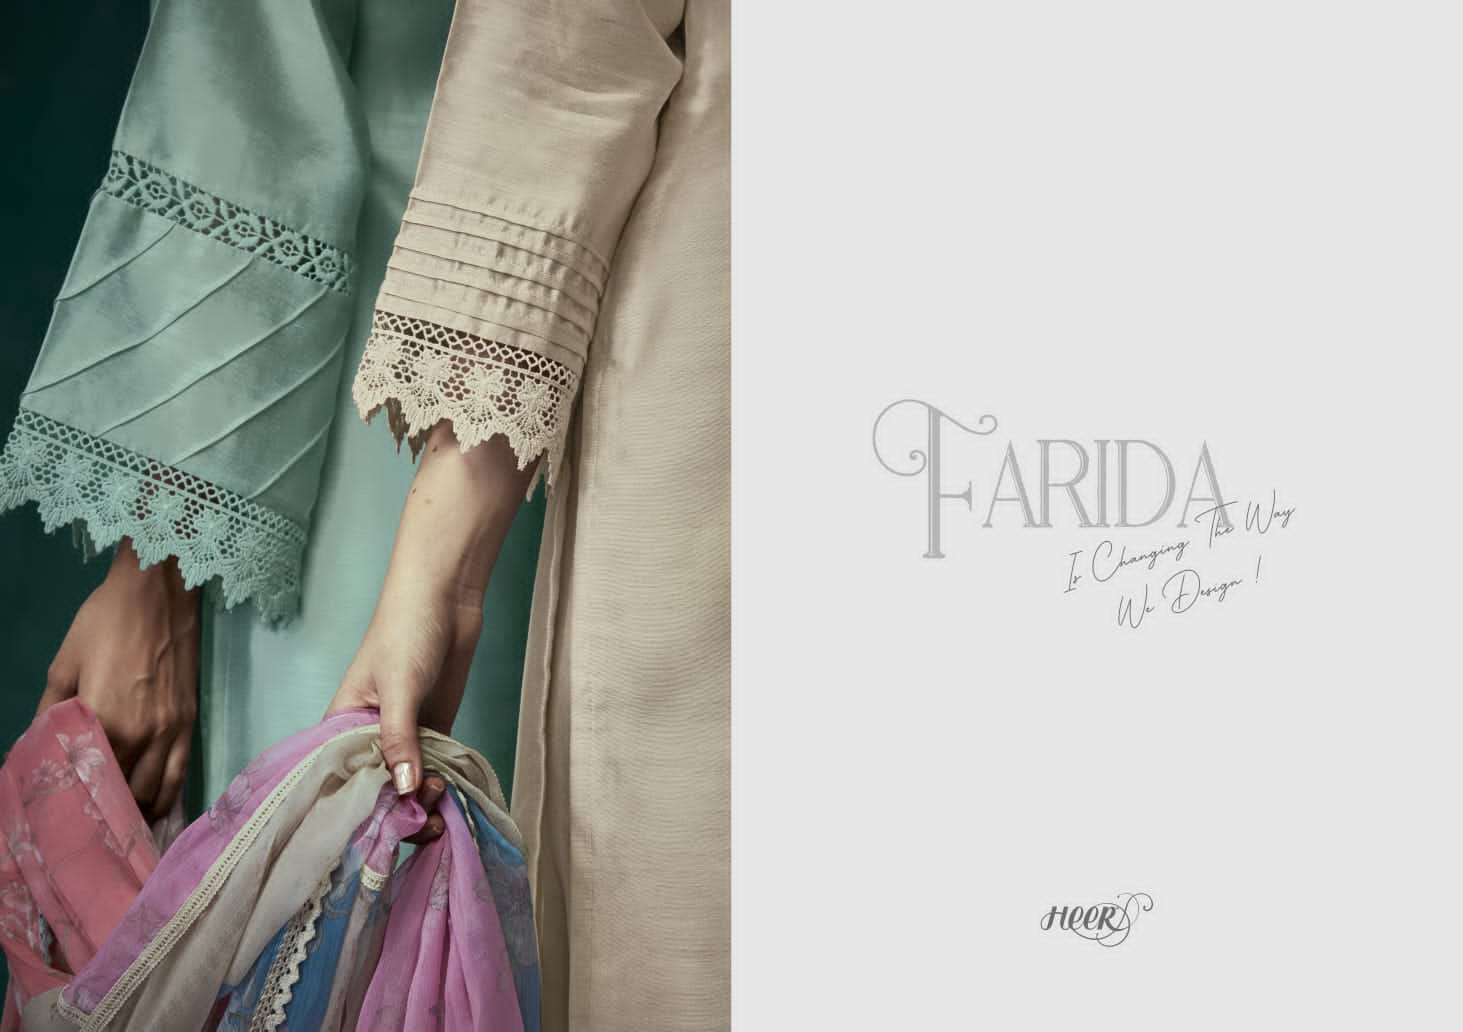 heer farida 9041-9048 series exclusive designer salwar suits catalogue wholesale price surat 